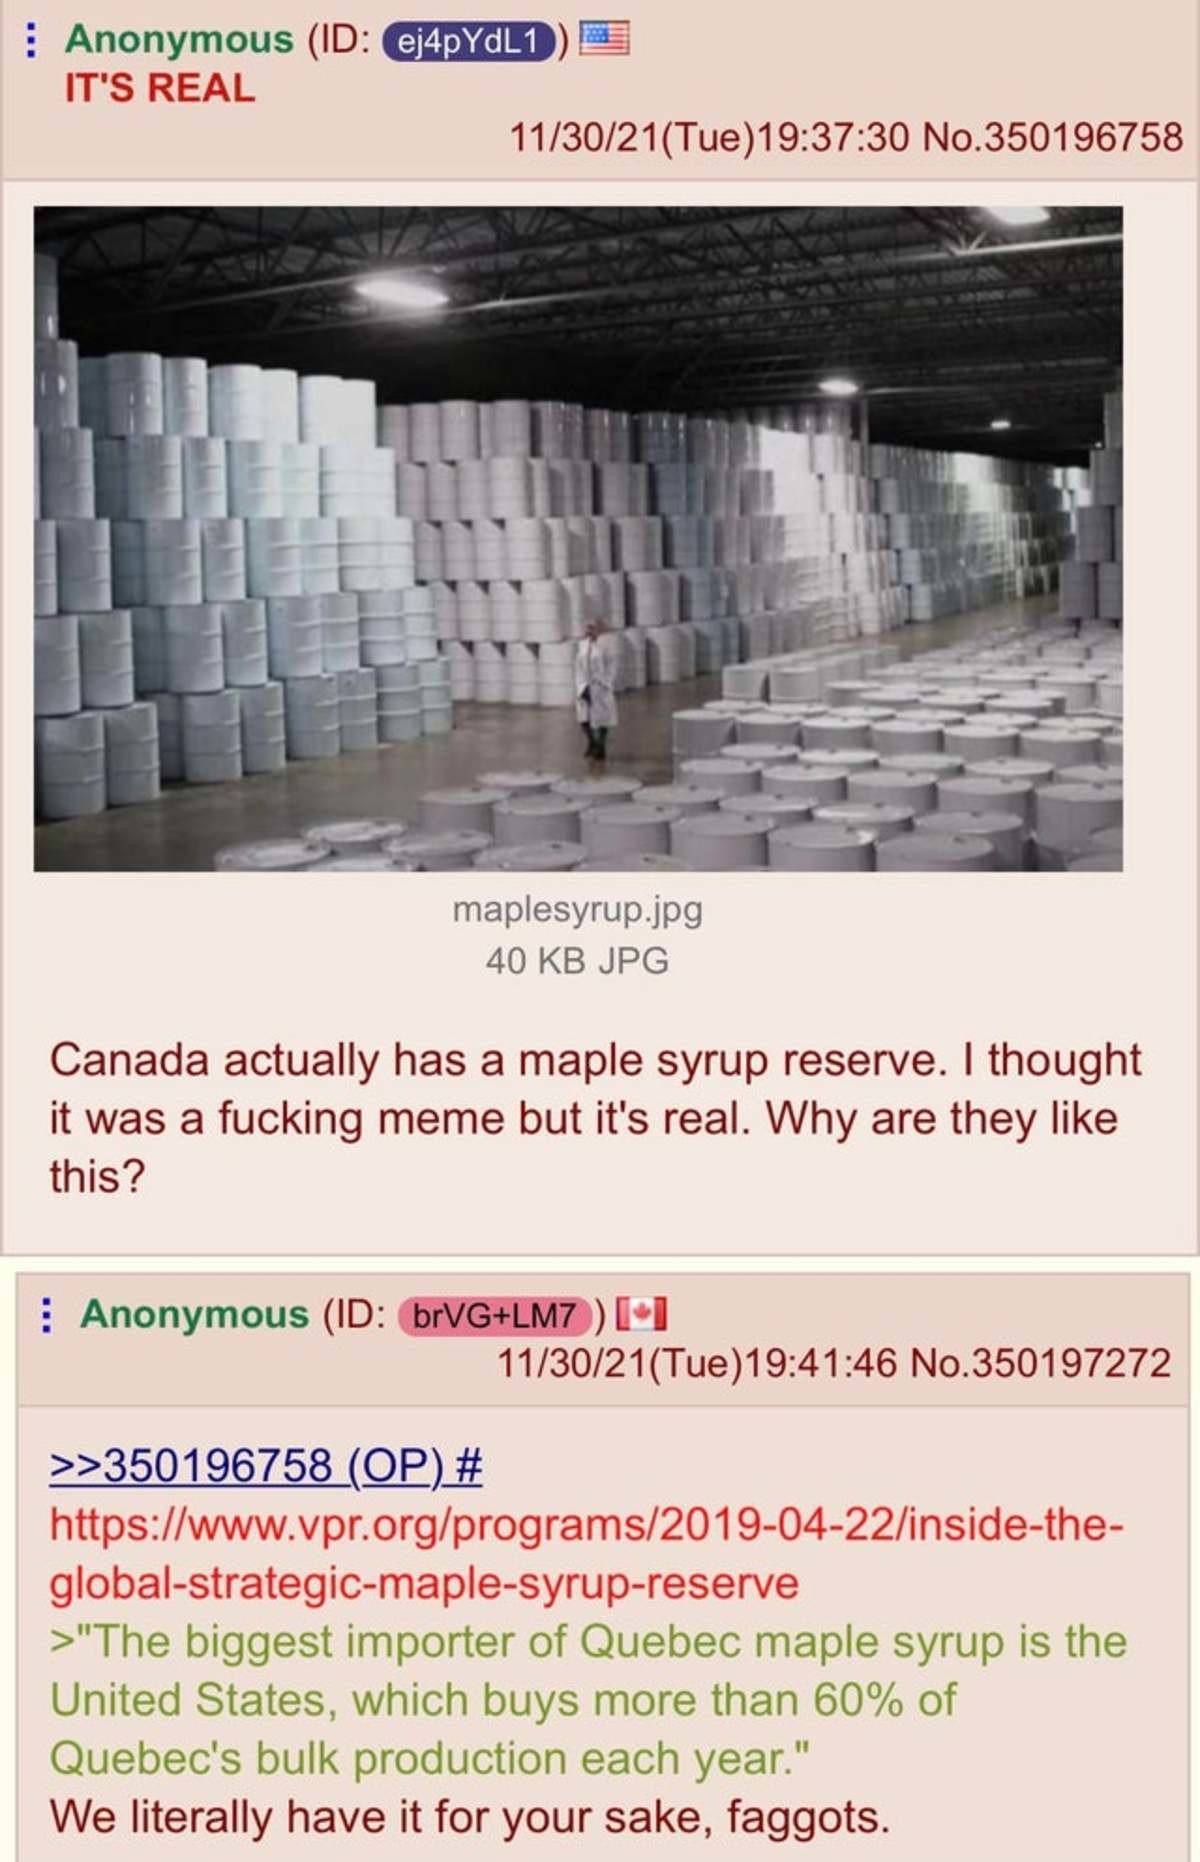 Canada's Maple Syrup Reserve. .. Oh boy wait till you hear about the Great Canadian Maple Syrup Heist lmao https://open.spotify.com/episode/3Q0z7CxVwrcKBjLhZnHl7I?si=EGwhEESmQtKgTFazbaFU9g&amp;